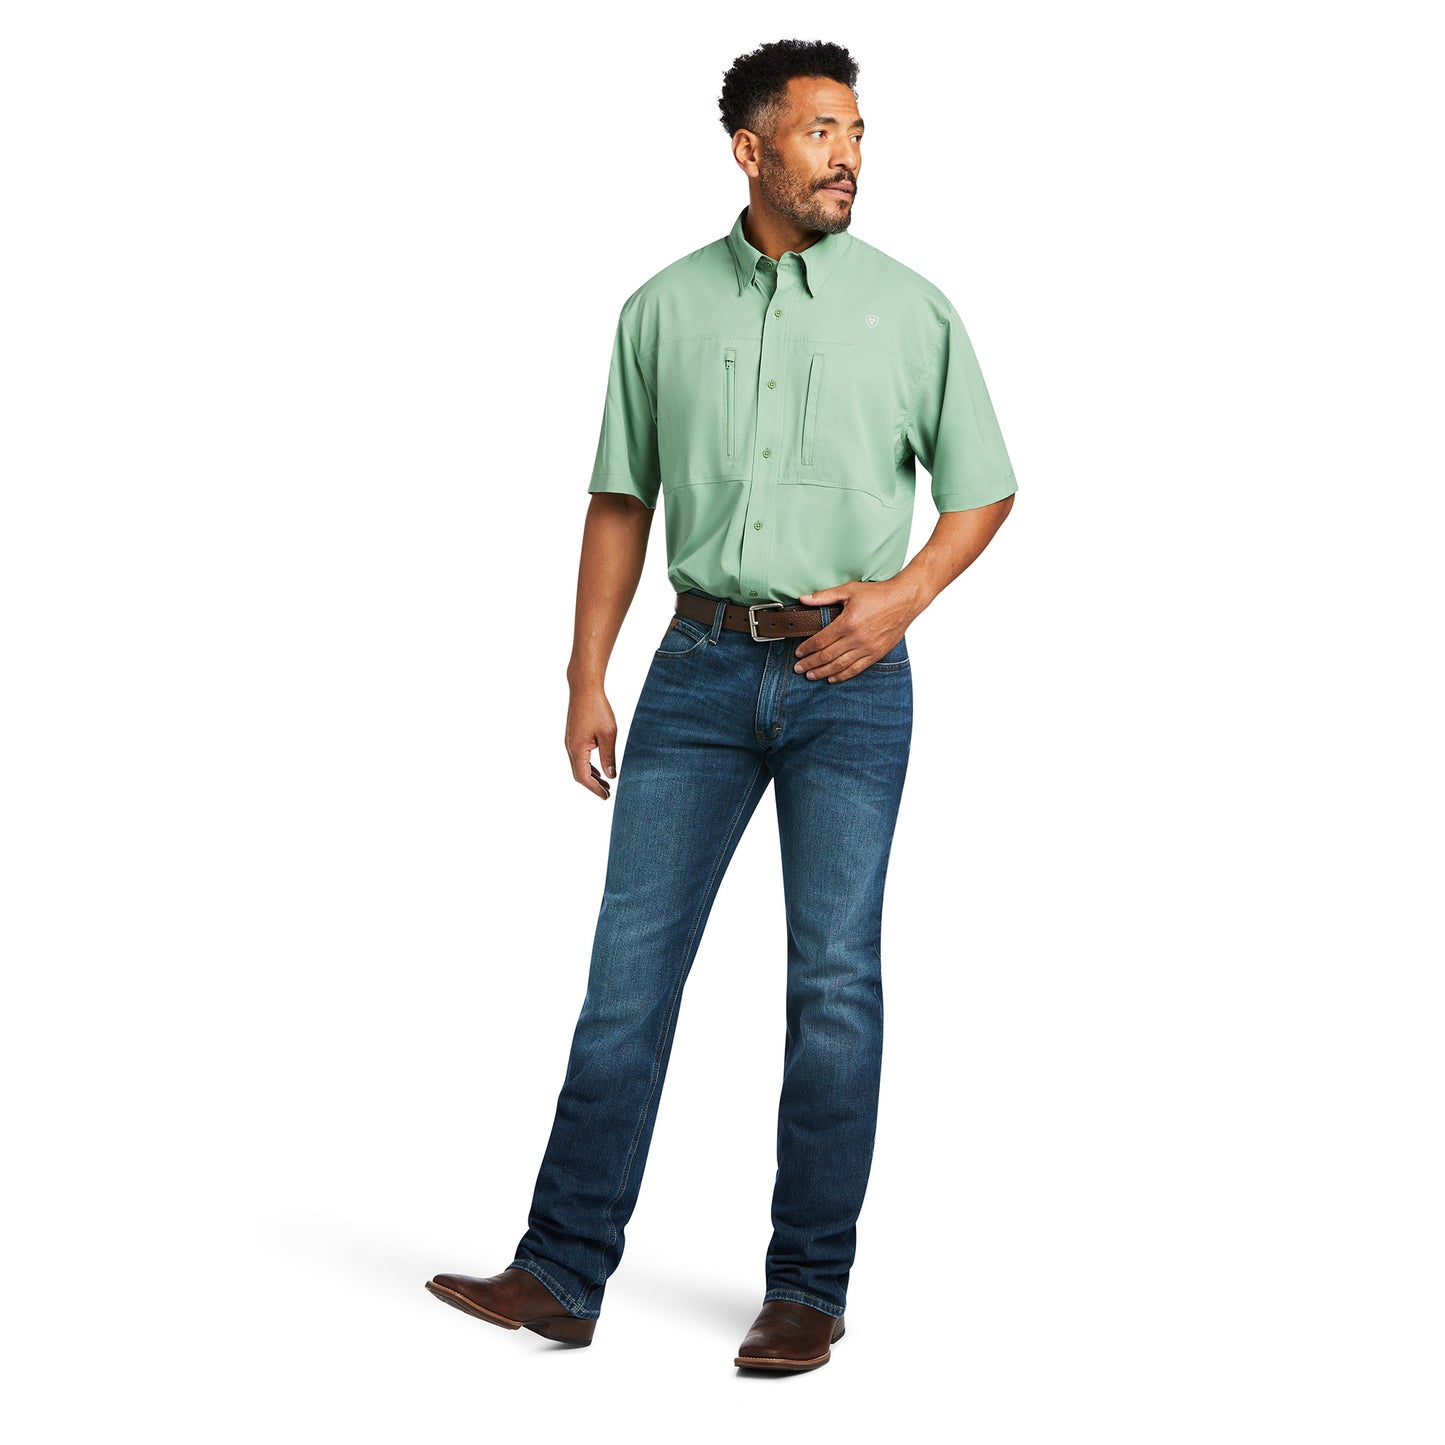 Ariat Men's Venttek Classic Turf Green Short Sleeve Shirt 10039373